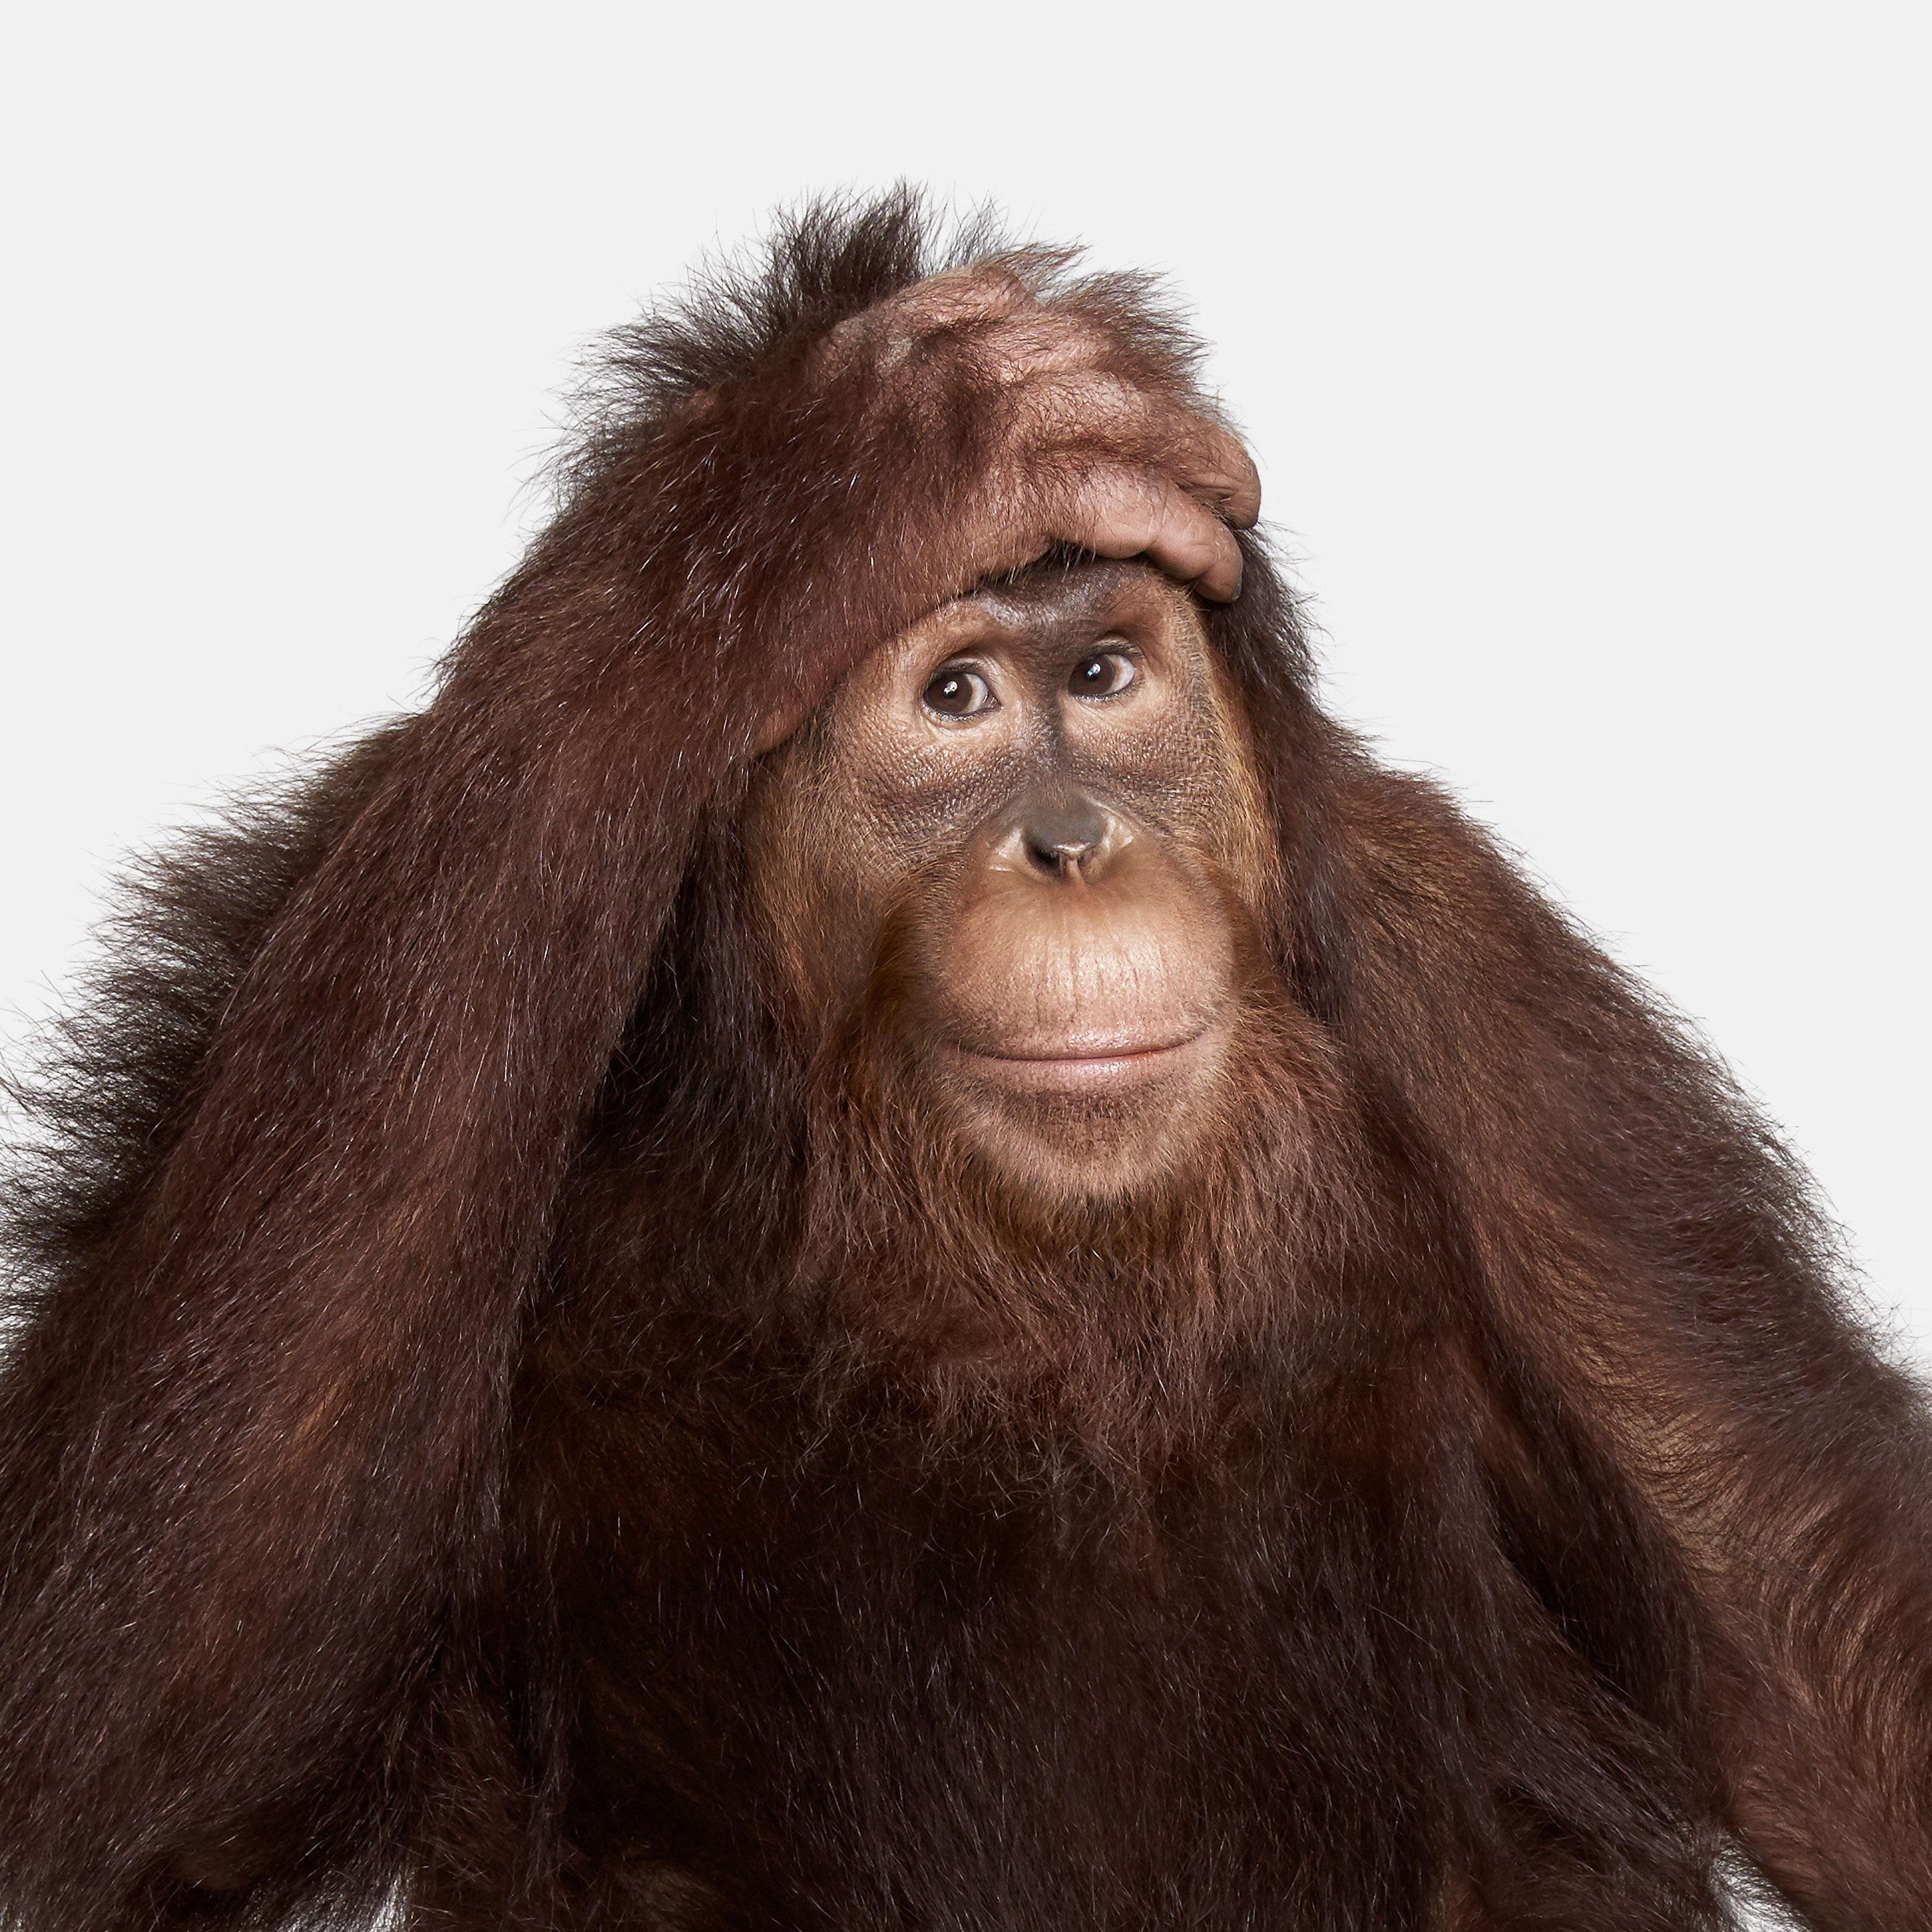 Randal Ford - Orangutan No. 1, Photography 2018, Printed After